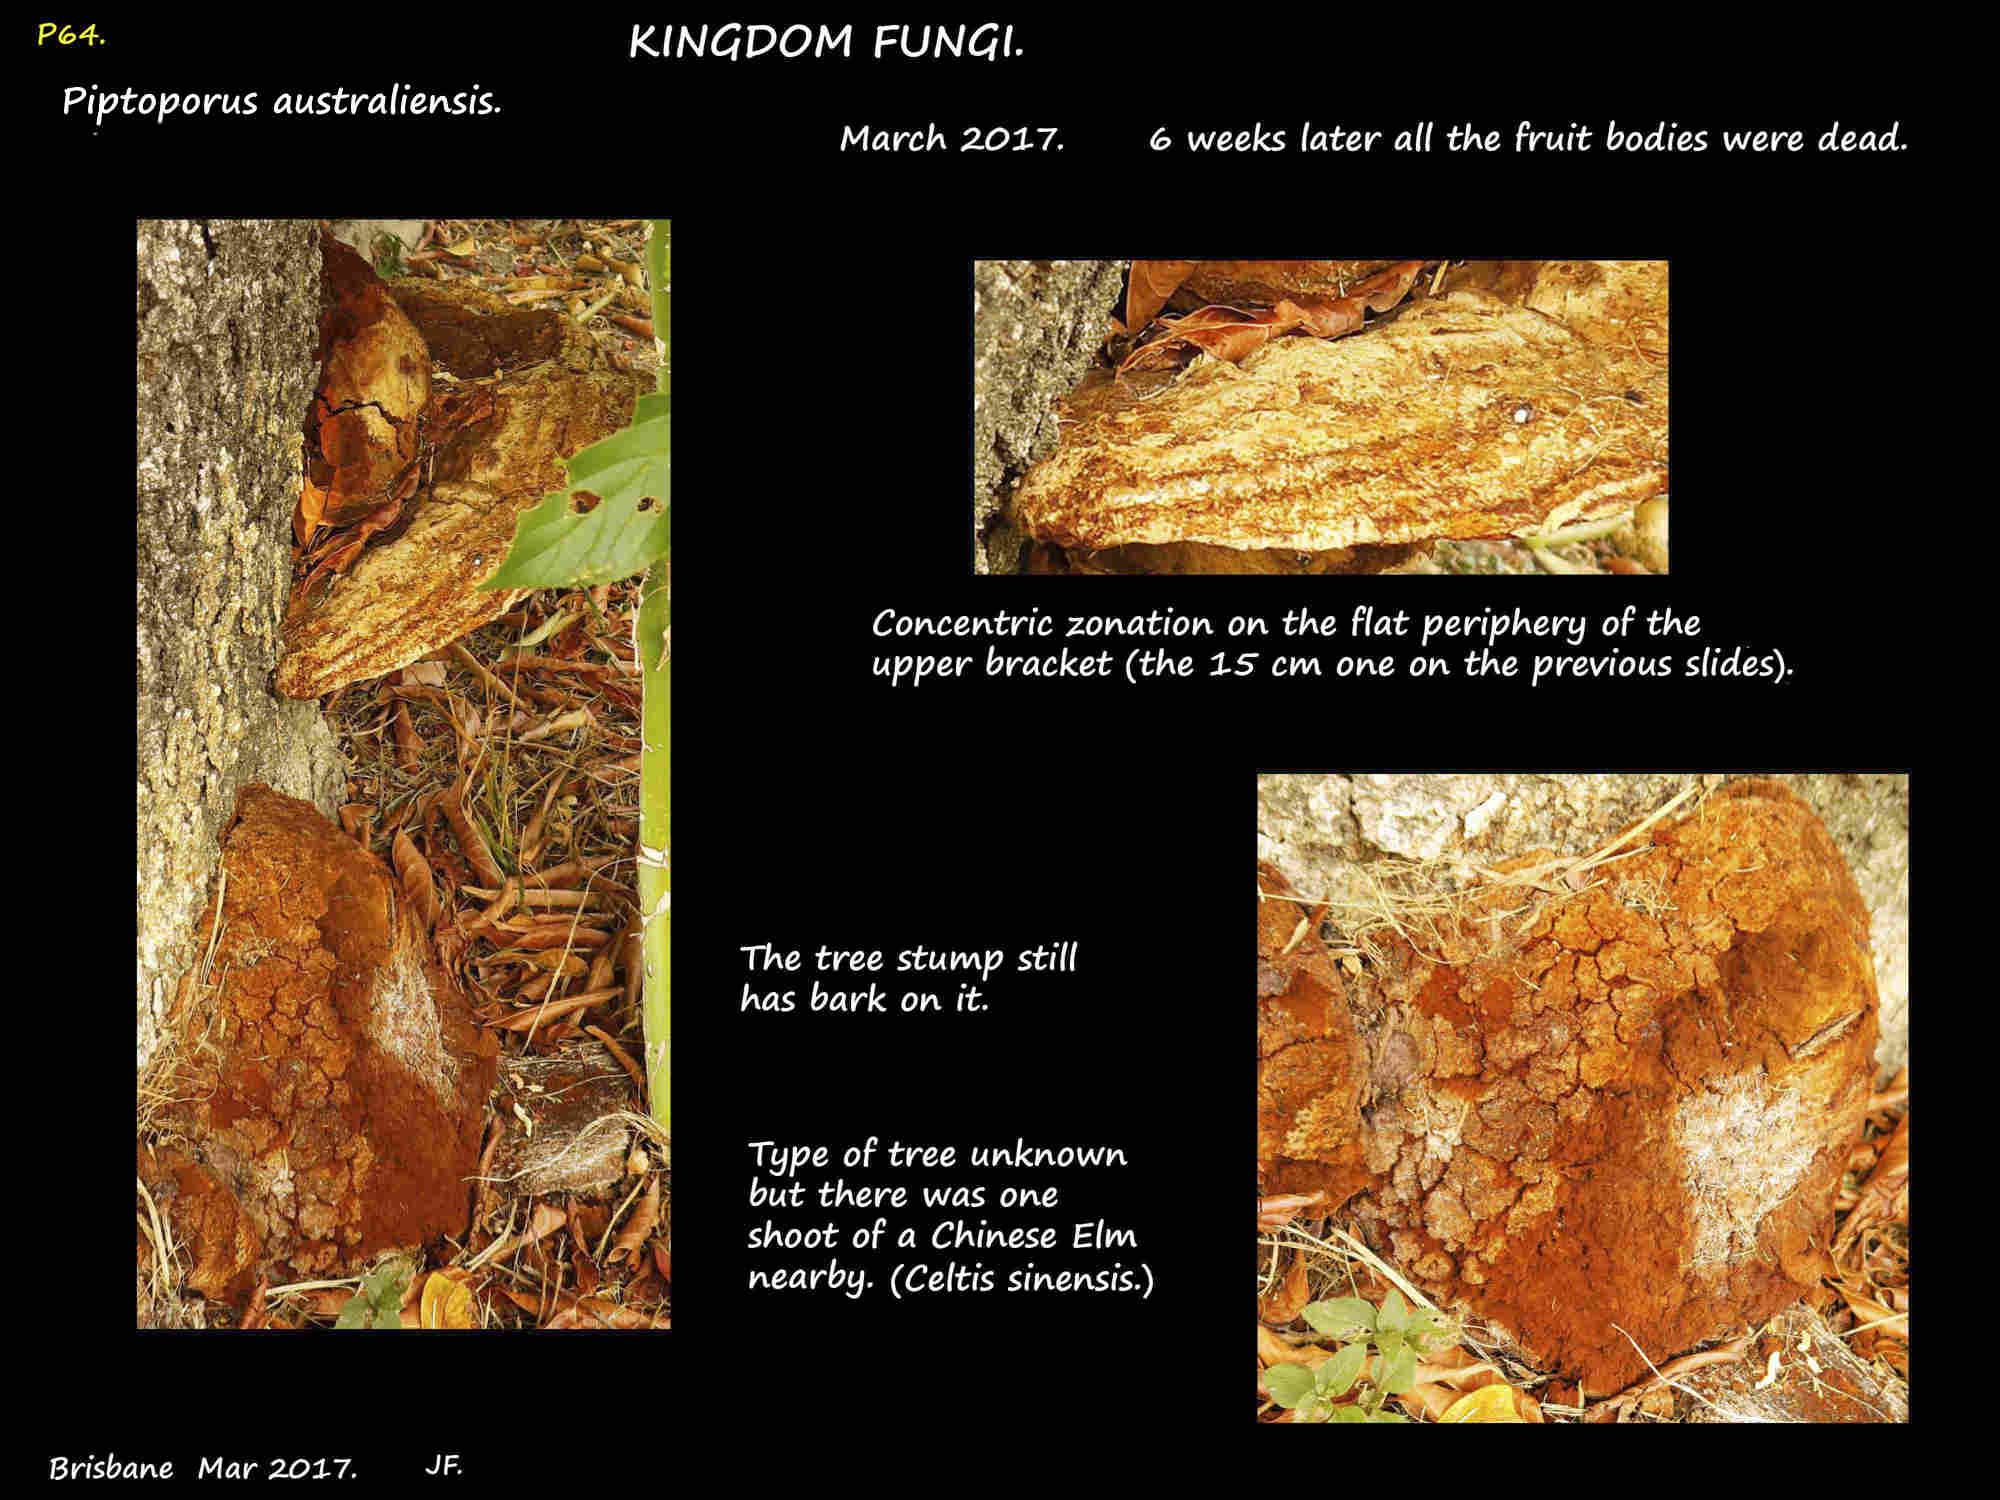 4 Dead brackets of a Piptoporus australiensis